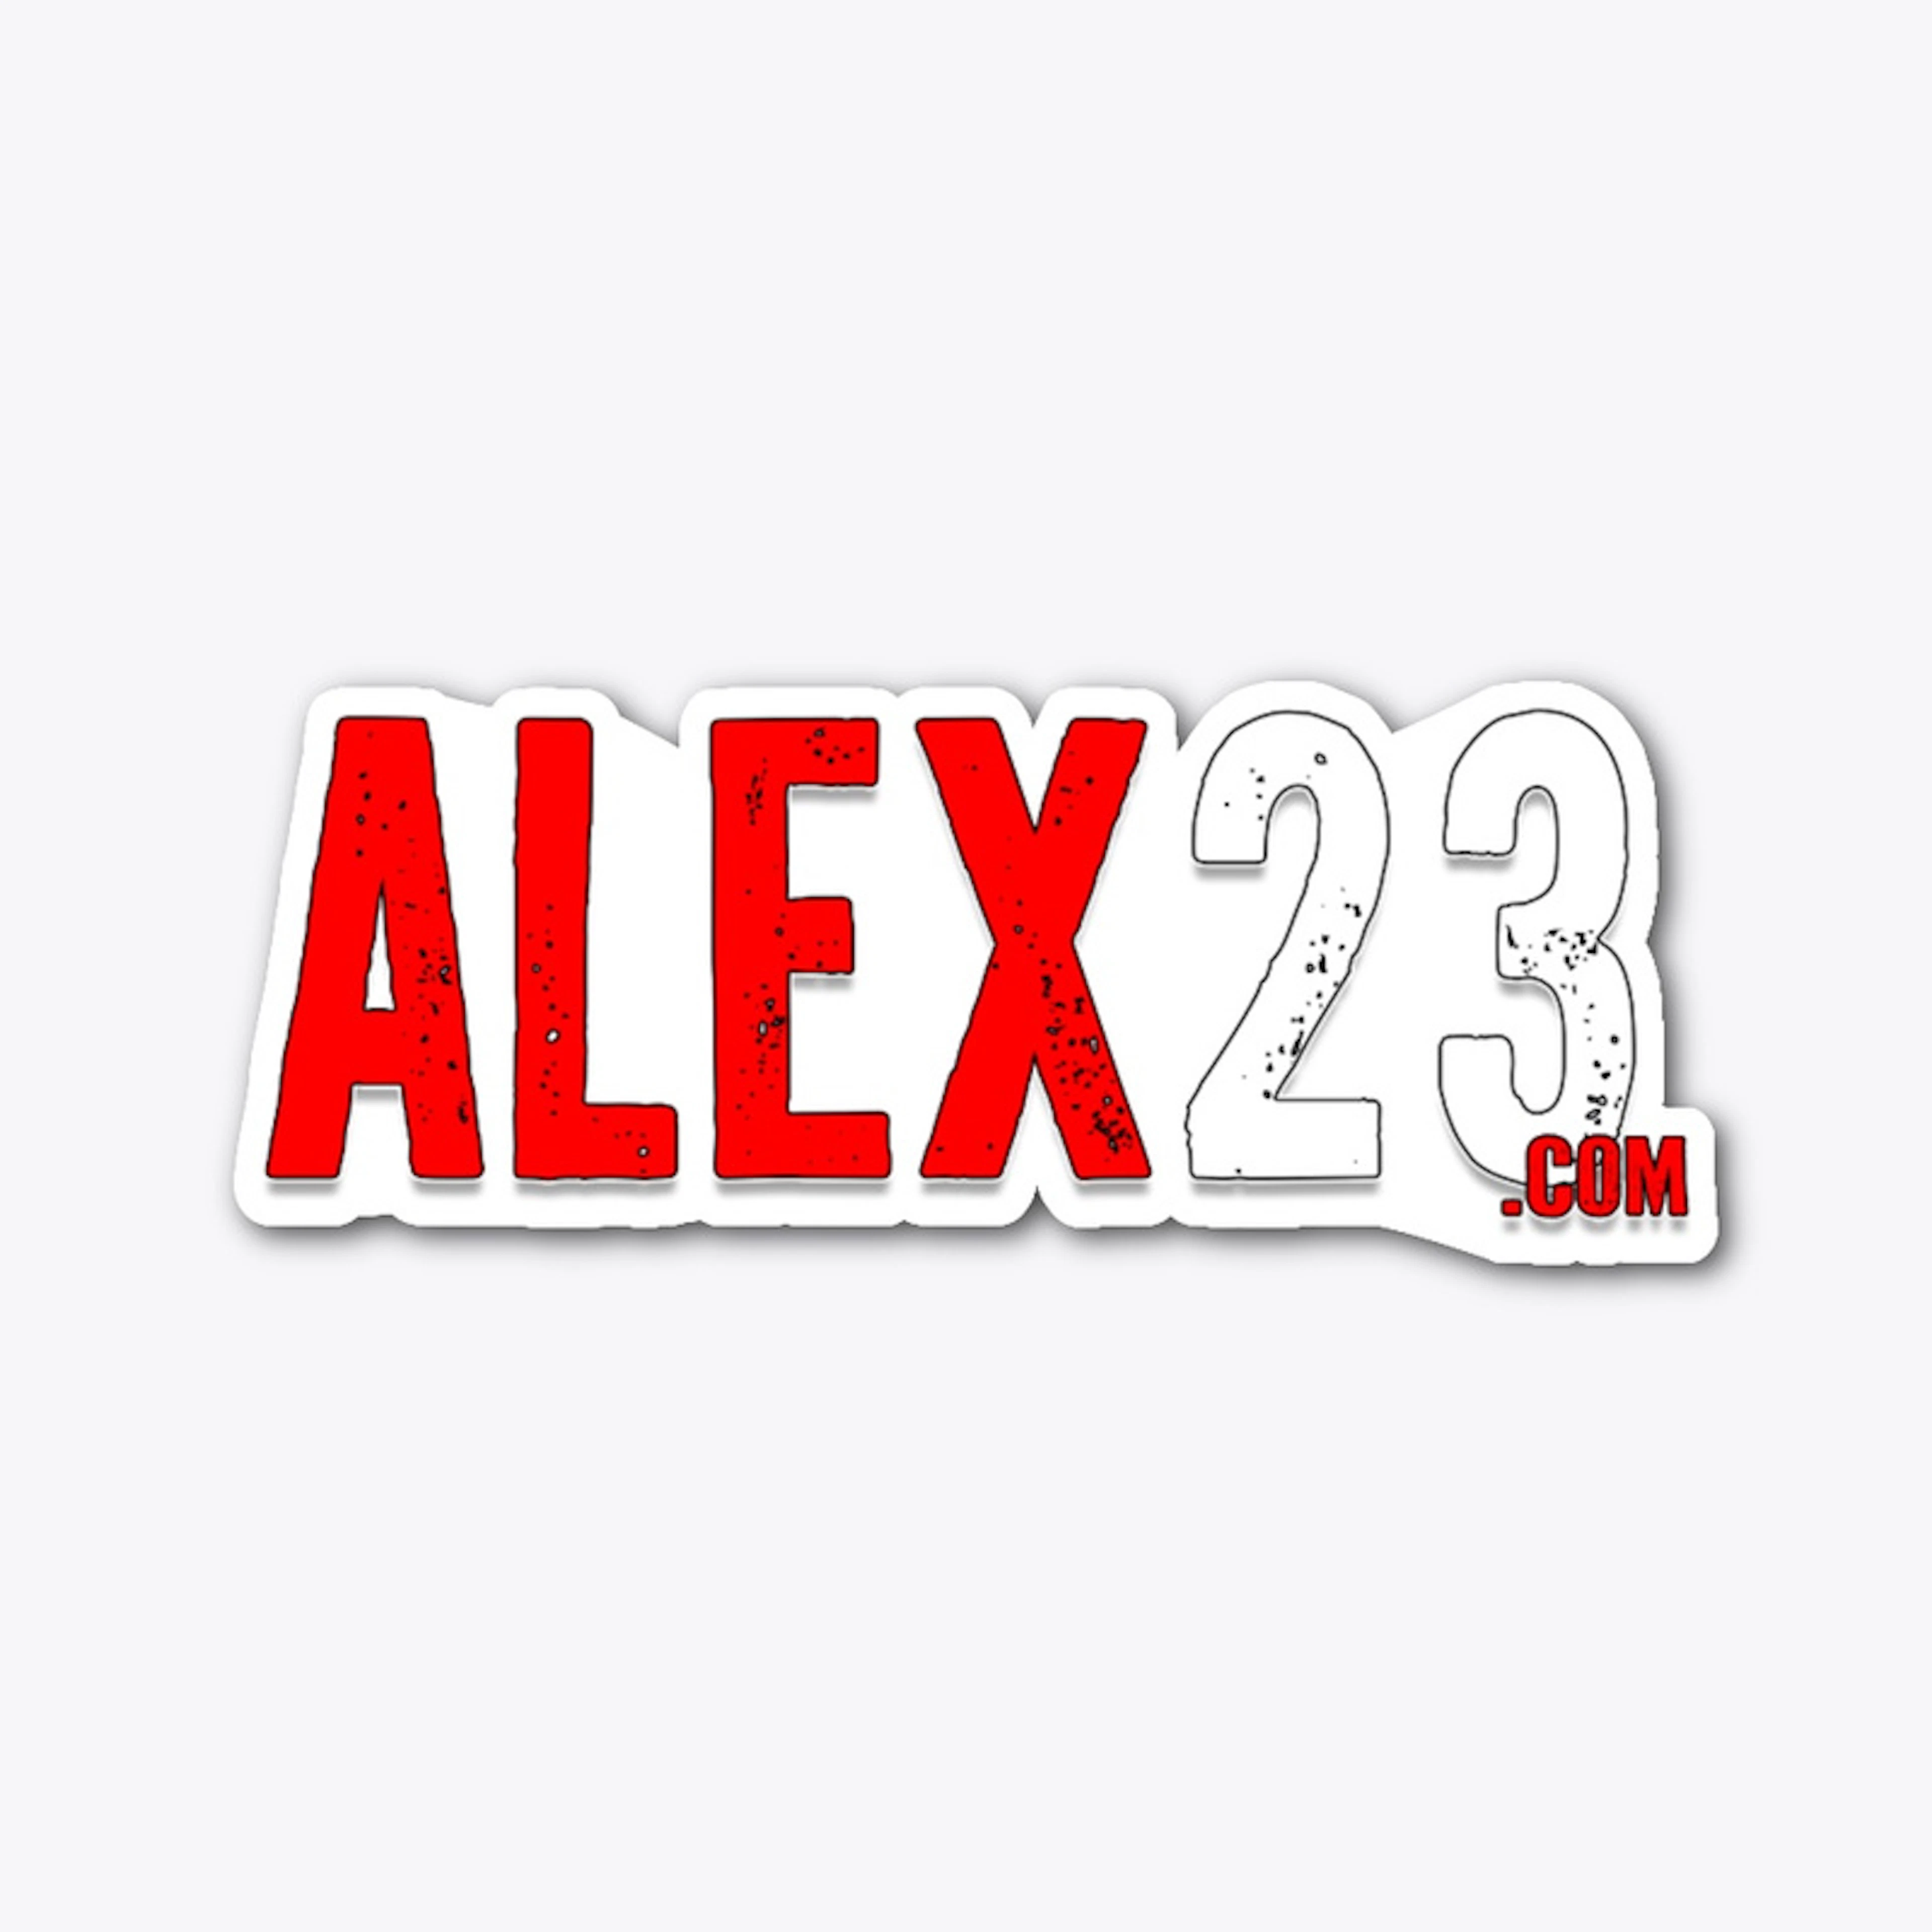 ALEX23